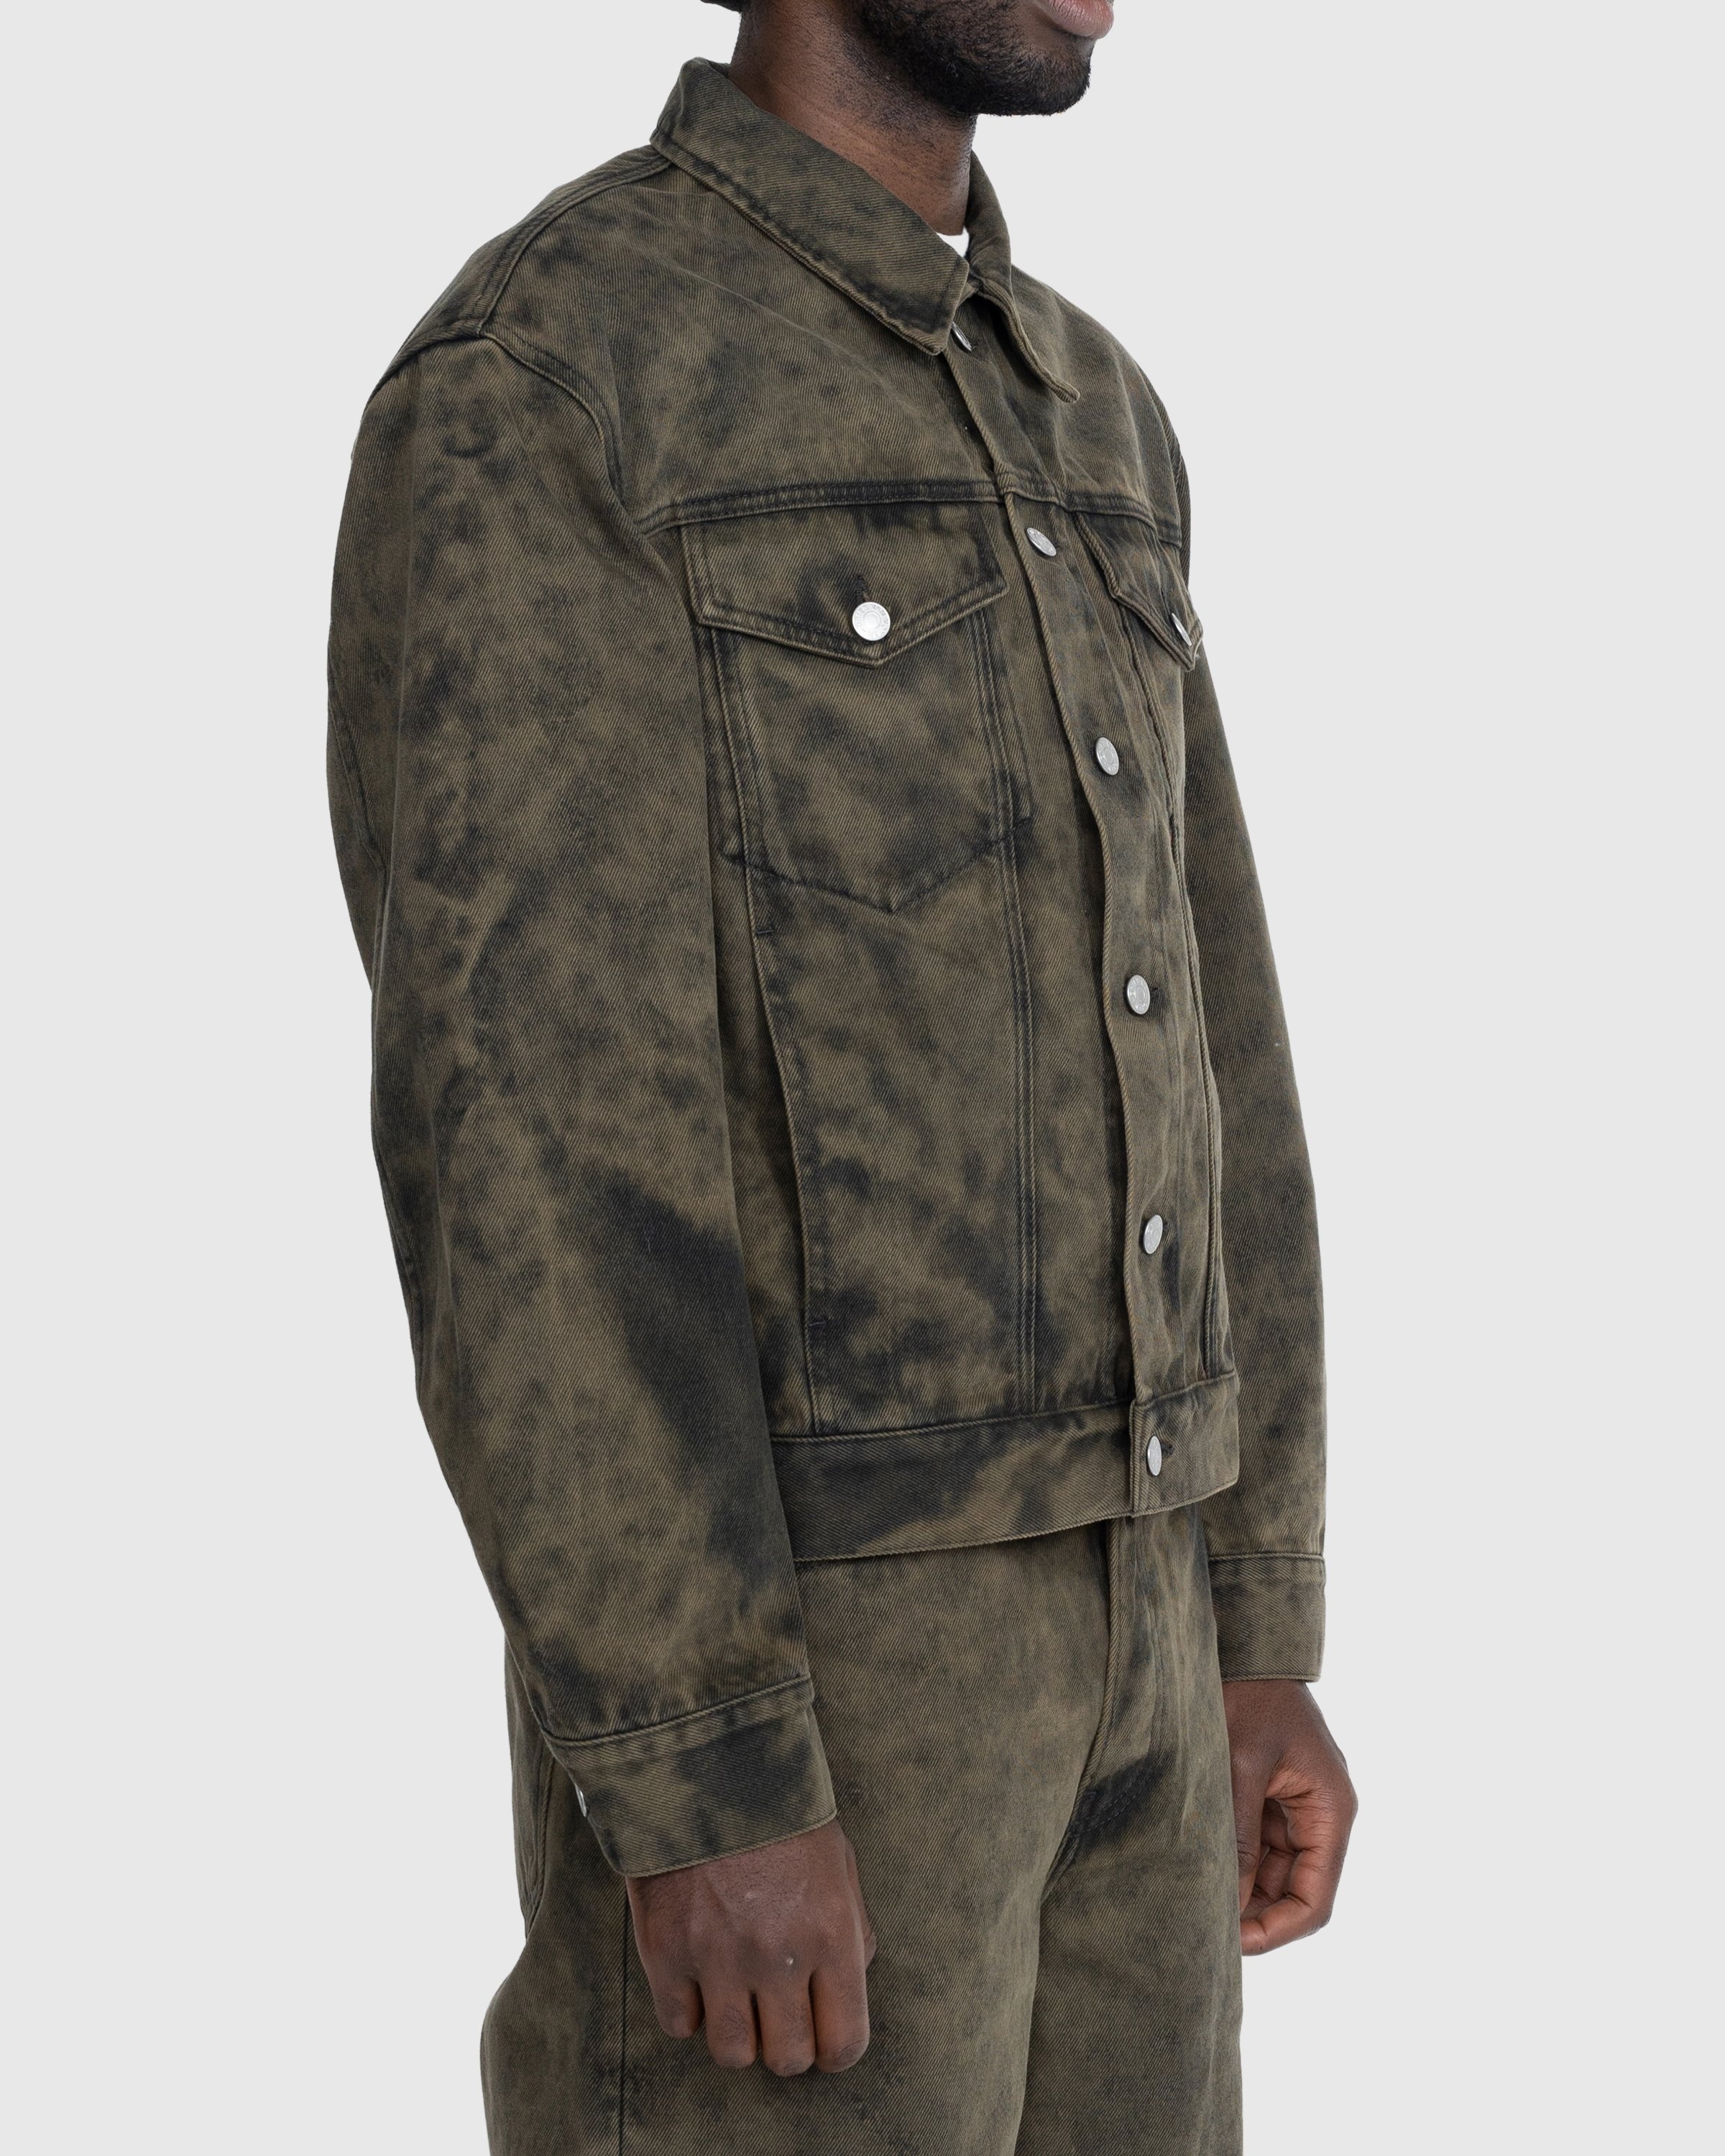 Dries van Noten – Vuskin Denim Jacket - Outerwear - Green - Image 3